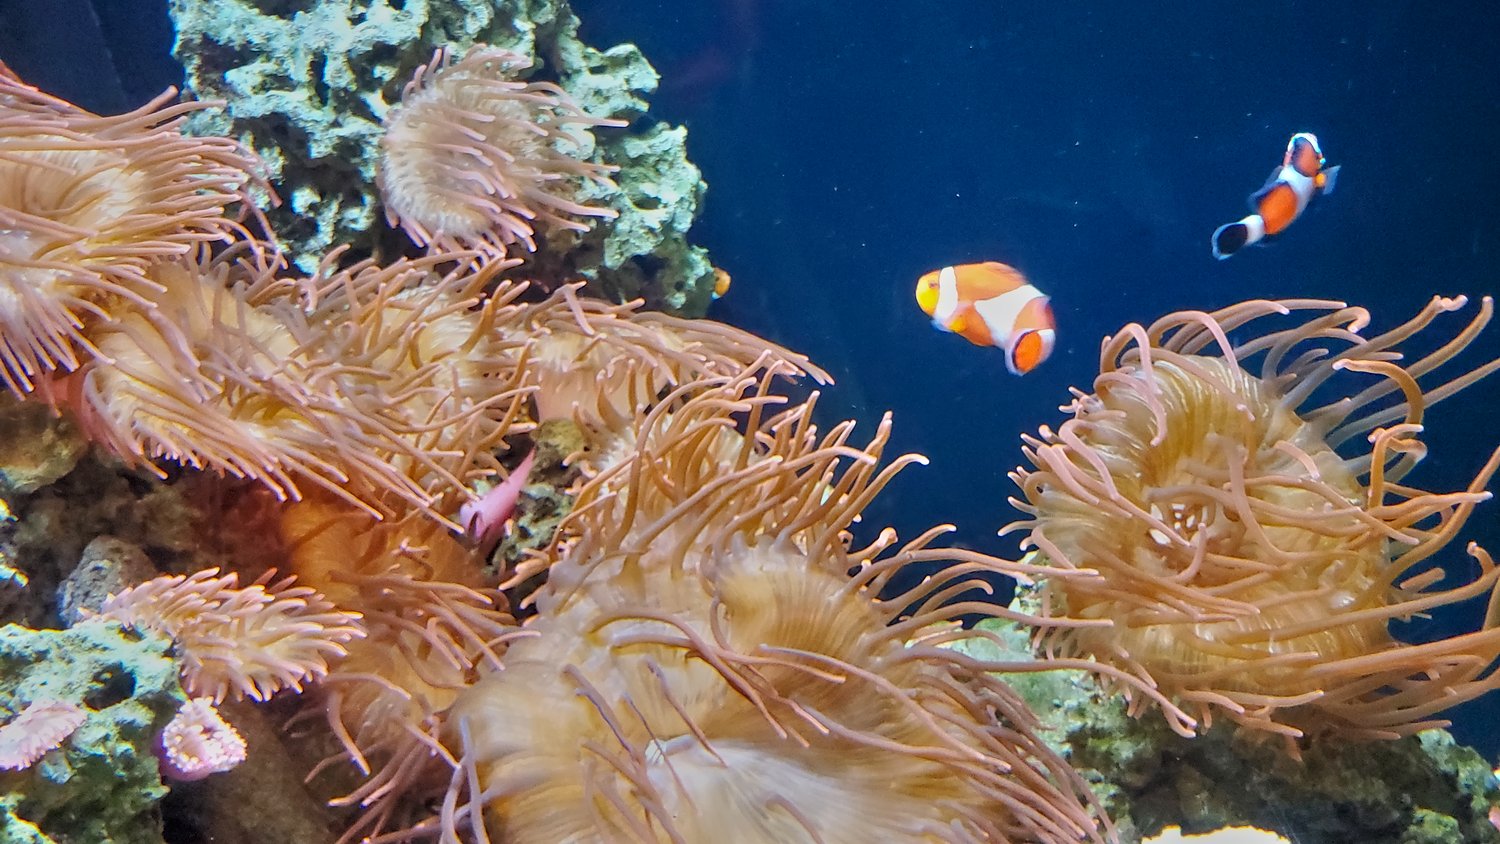 Clown fish and sea anemone.